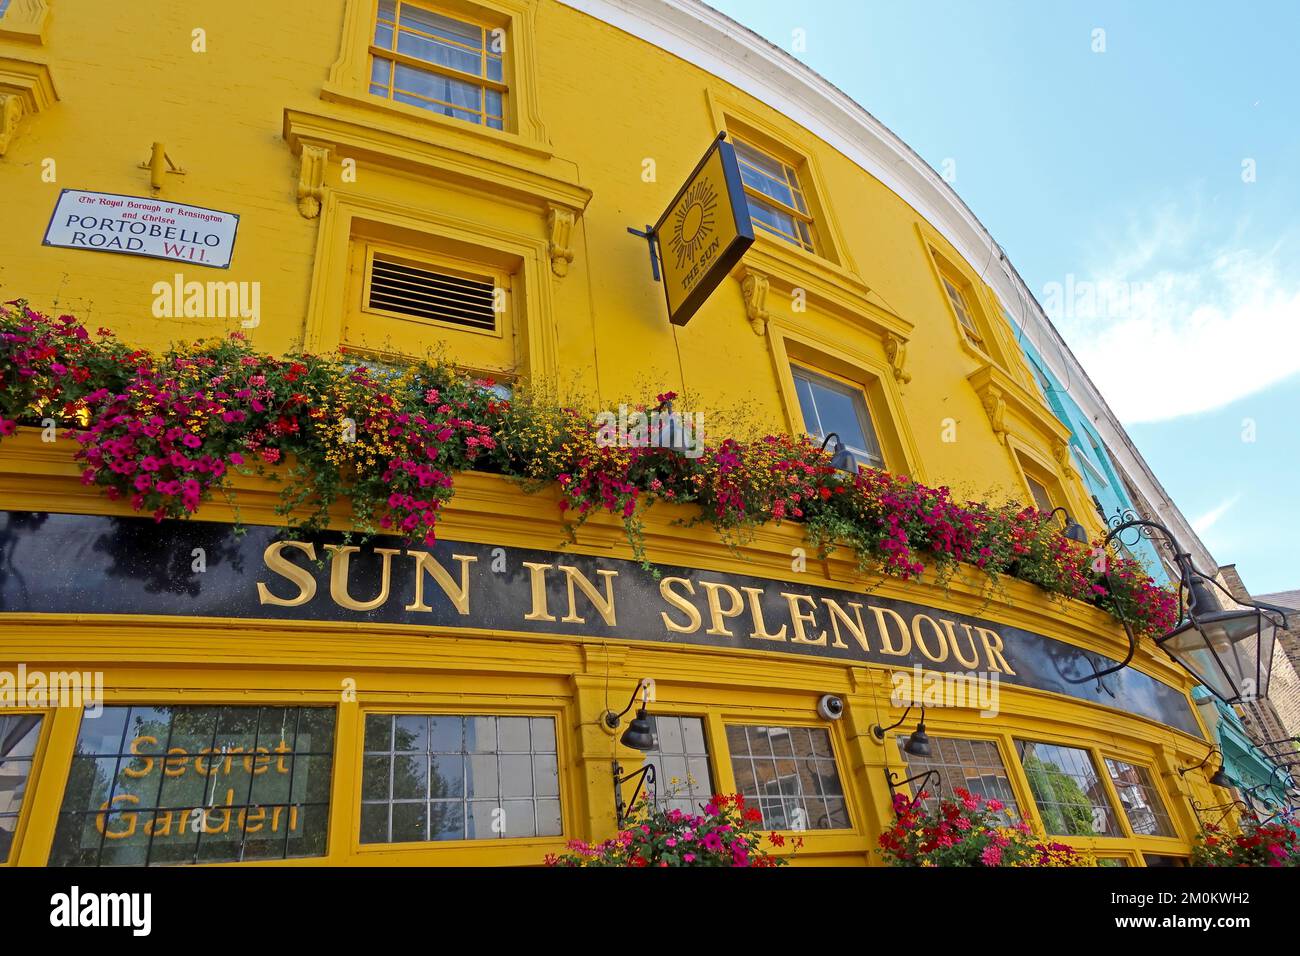 Sun in Splendor, pub, 7 Portobello Road, Notting Hill, RBKC, Londres, Angleterre, Royaume-Uni, W11 3da Banque D'Images